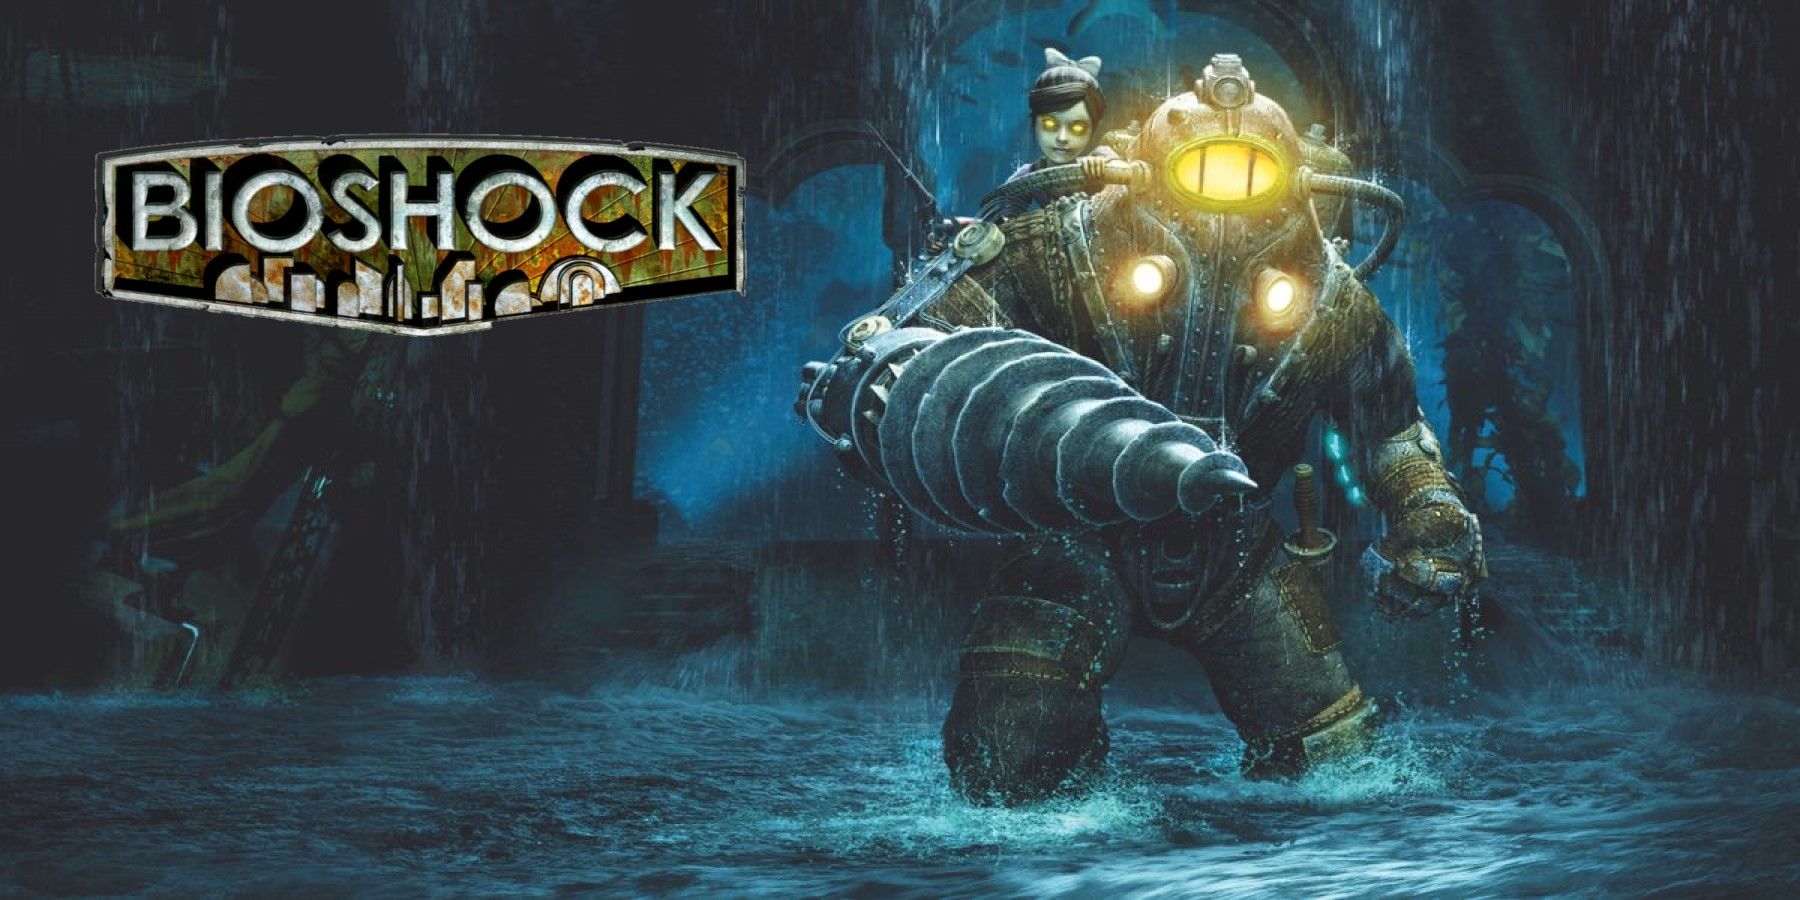 bioshock-2-big-daddy-with-logo